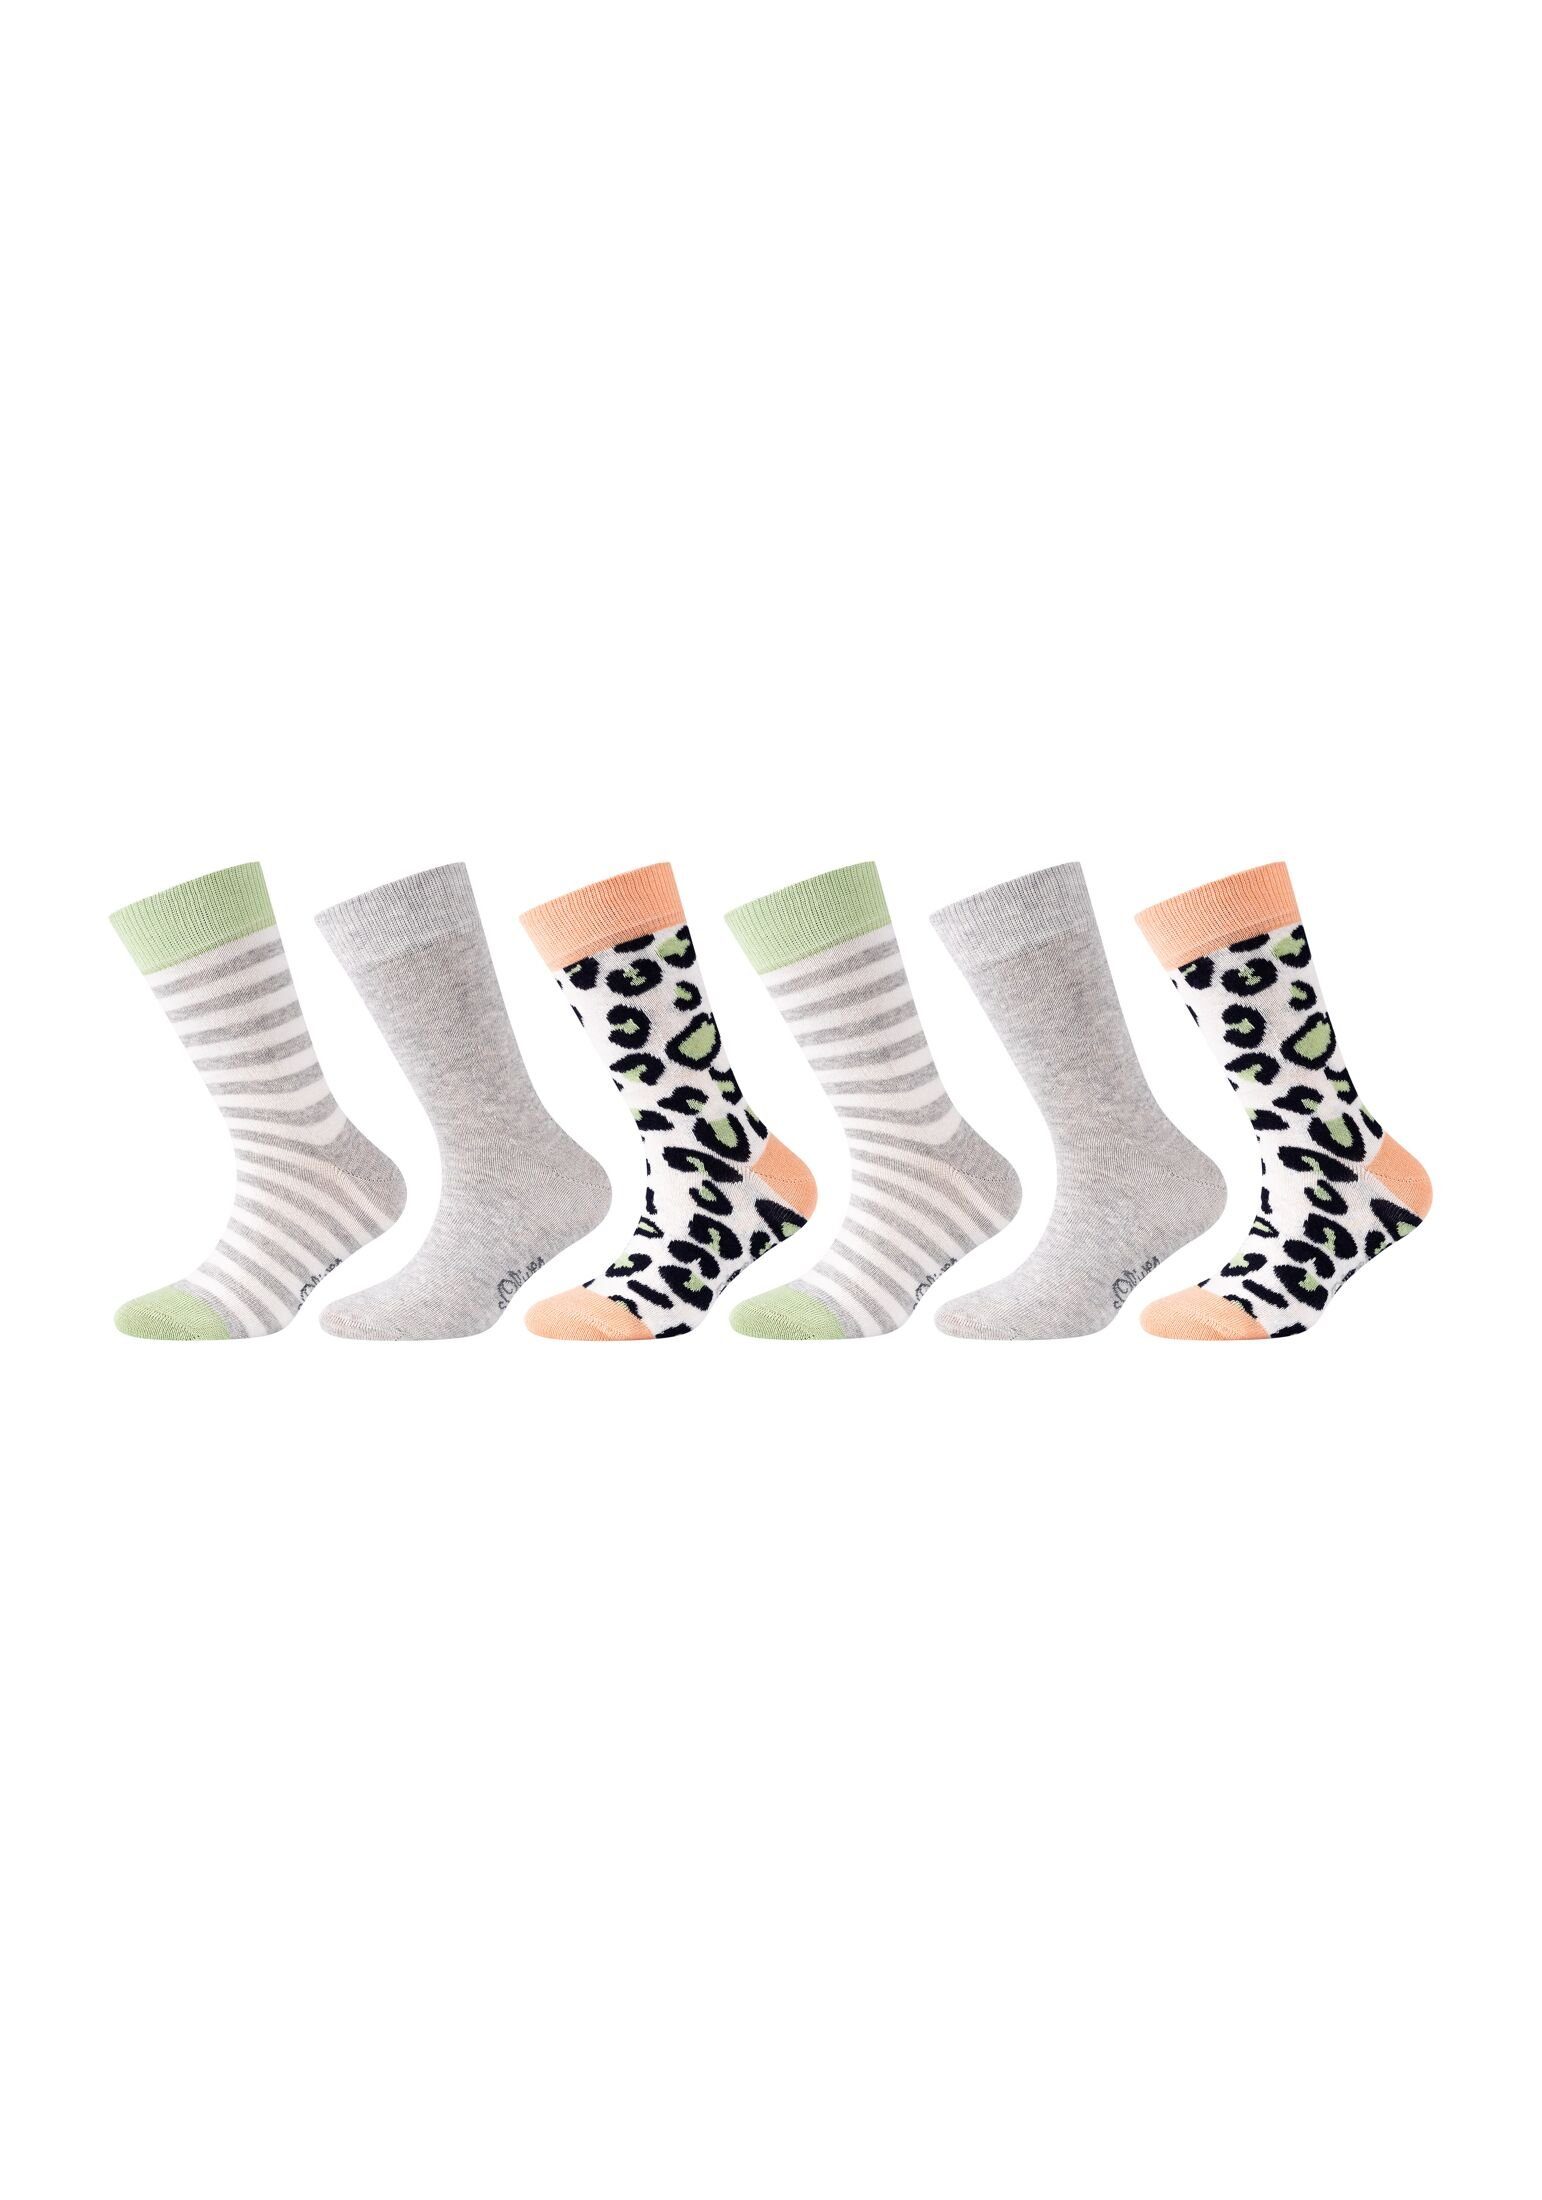 verstärkter dank Belastungszonen Socken Strapazierfähig: Pack, Socken 6er s.Oliver